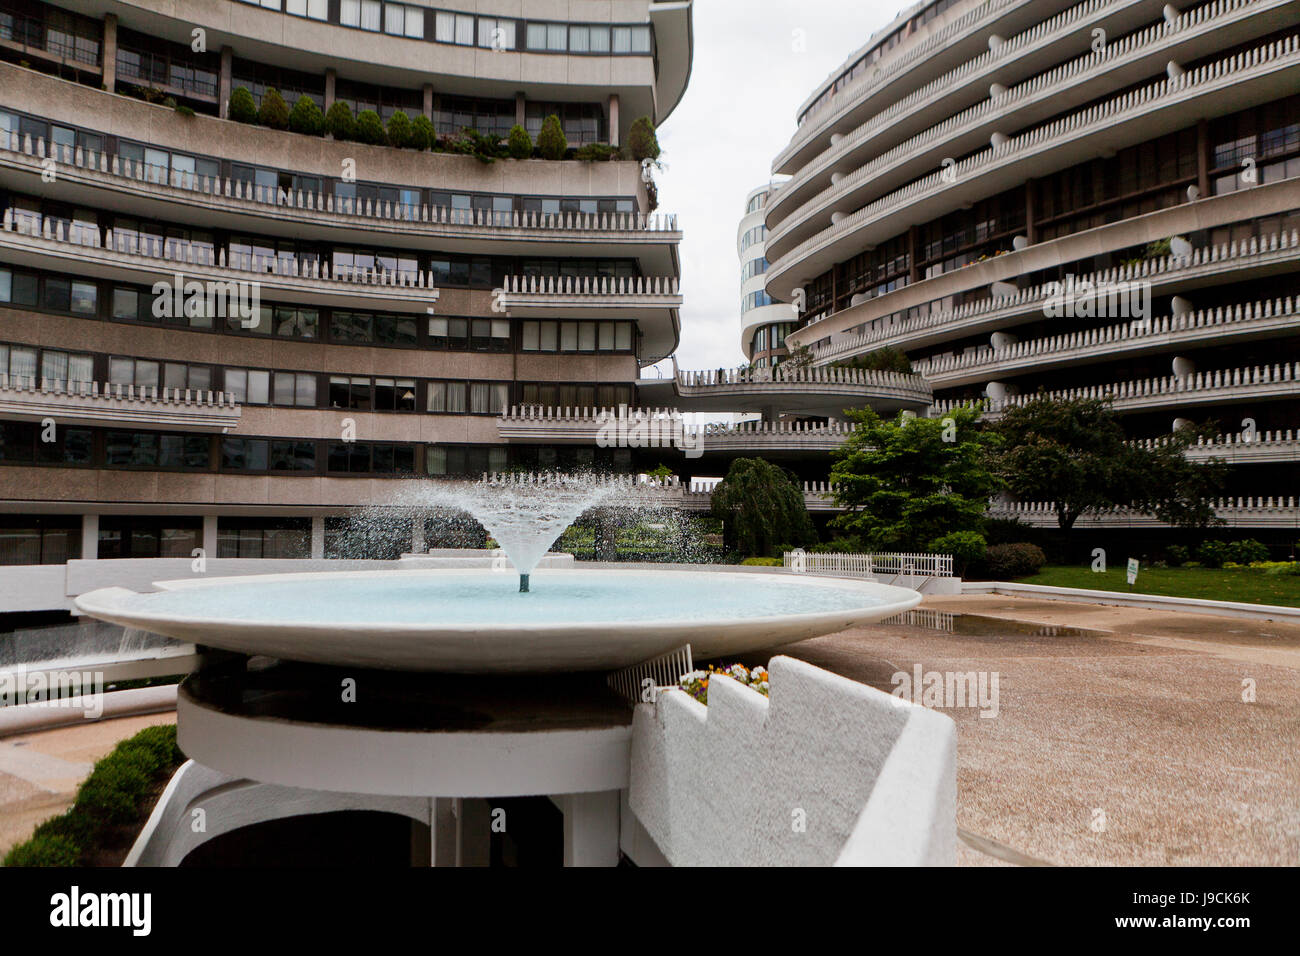 Watergate hotel complex - Washington, DC USA Stock Photo